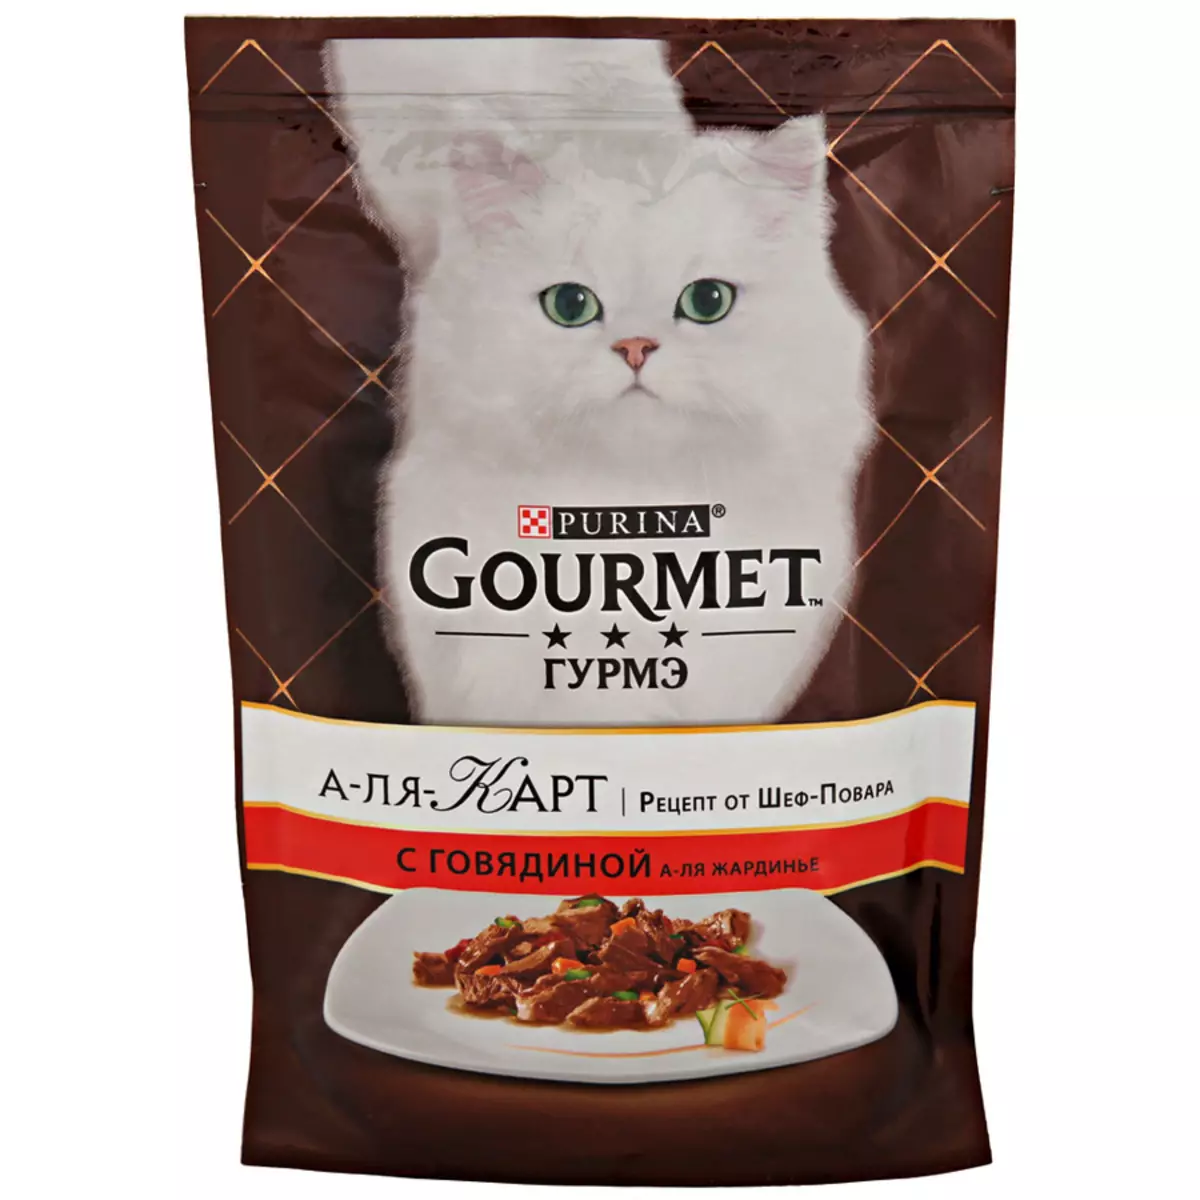 Gourmet: อาหารแมวและลูกแมว Purina, Pates เปียกและอาหารกระป๋องอื่น ๆ องค์ประกอบของพวกเขาความคิดเห็น 22711_40